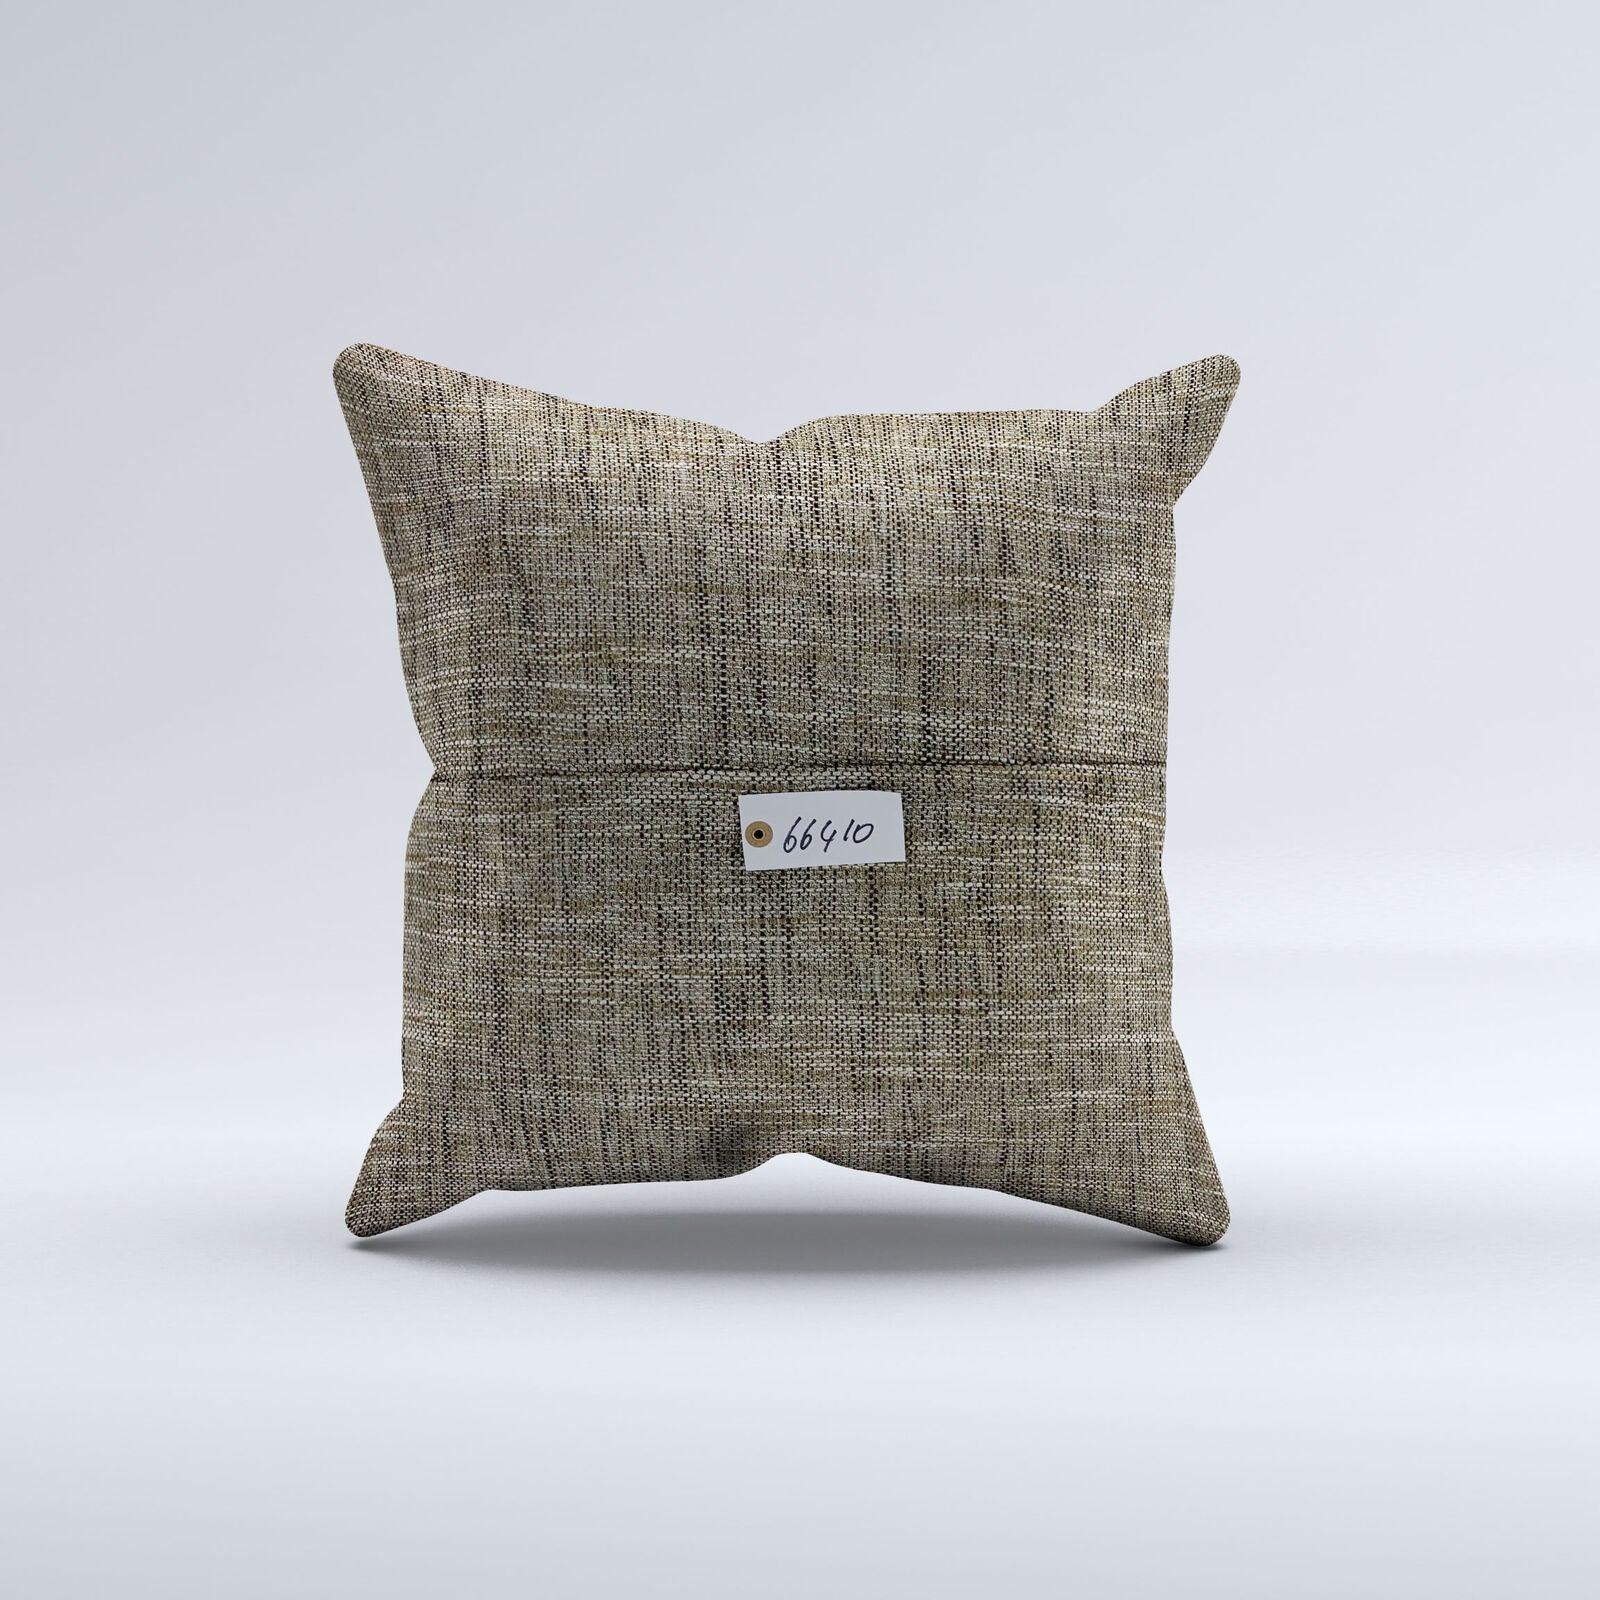 Vintage Turkish Kilim Cushion Cover 60x60 cm Square Wool Kelim Pillowcase 66410